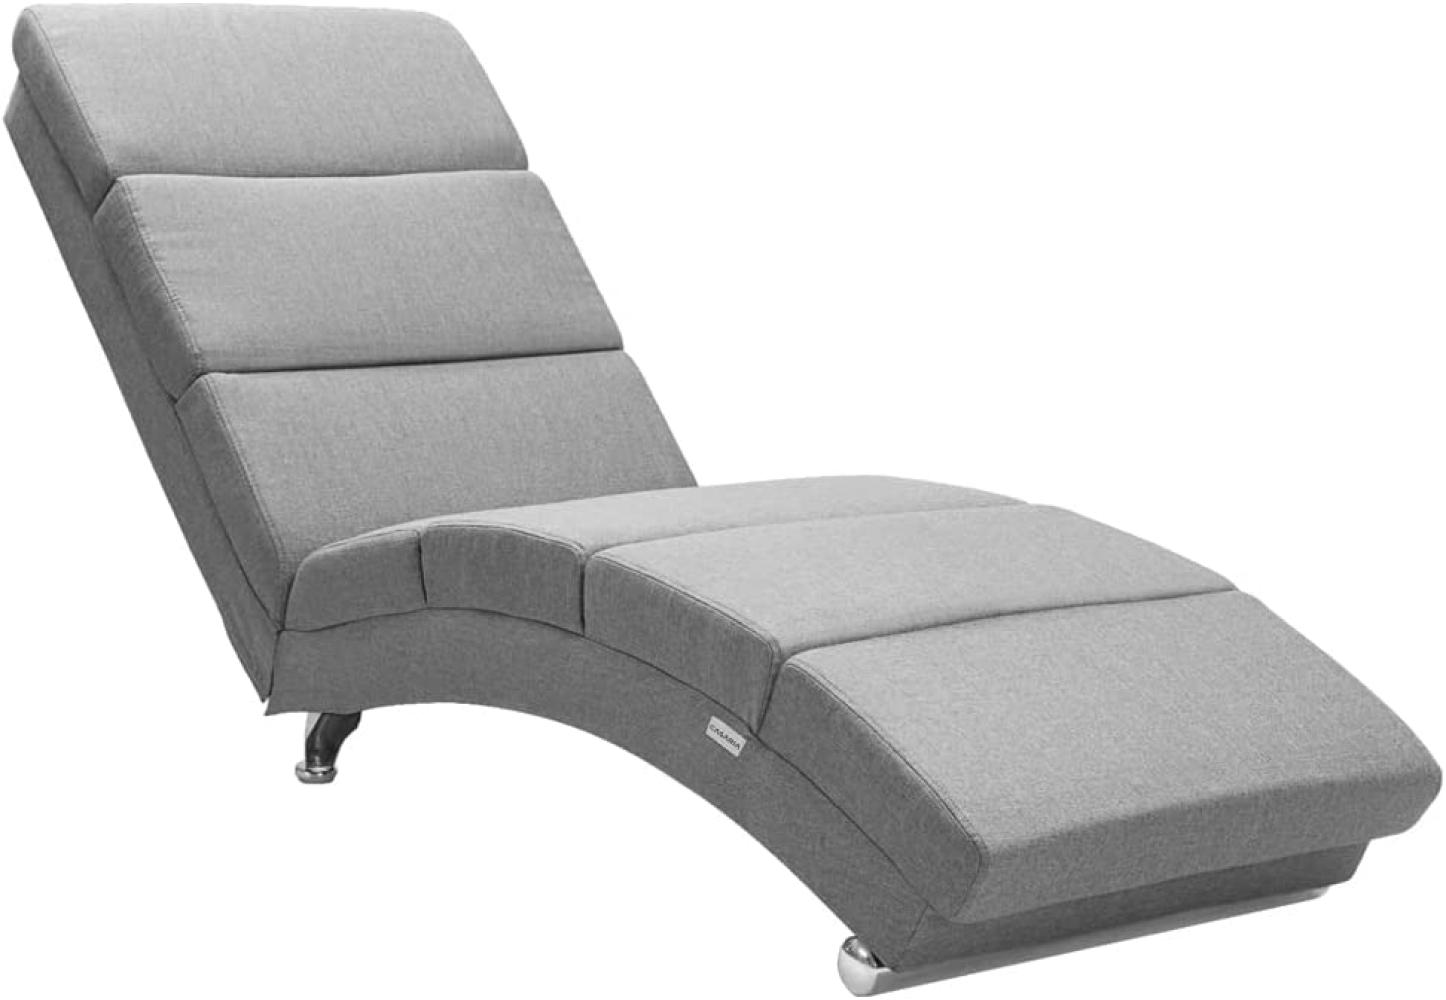 Casaria Relaxliege XXL London Ergonomisch hohe Rückenlehne 186cm Relaxsessel Loungesessel Chaiselongue Stoff Grau Bild 1